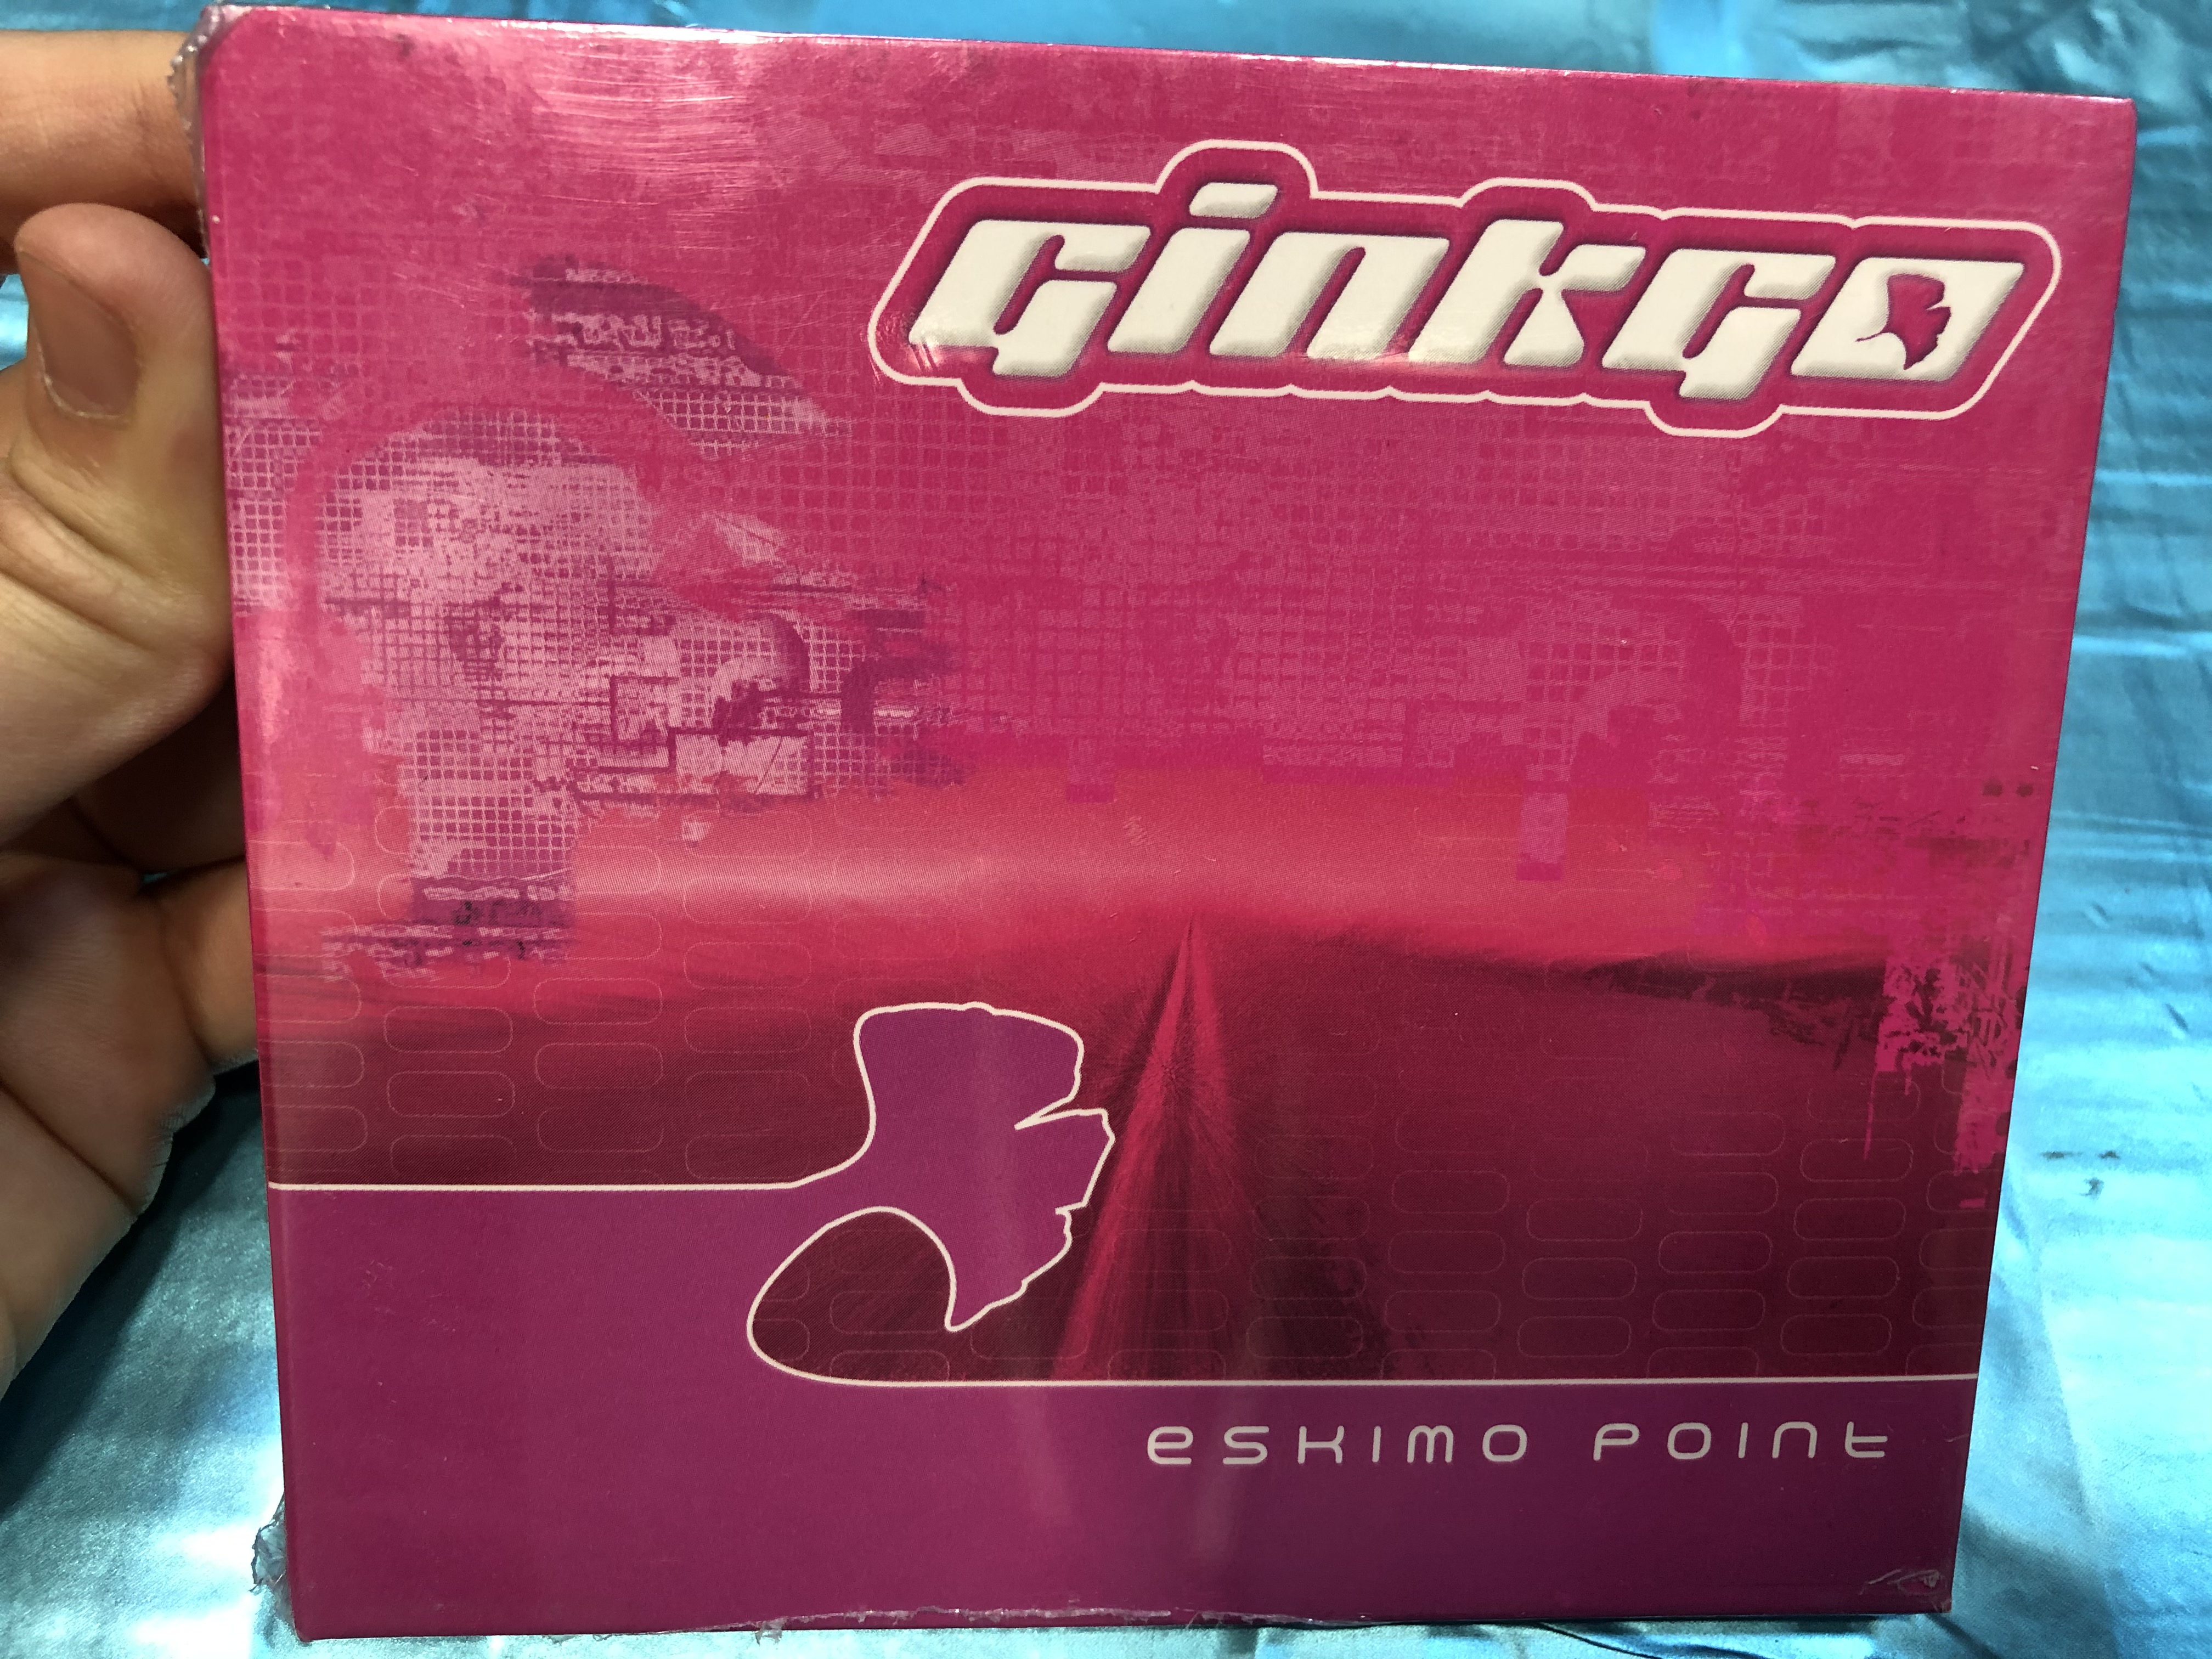 ginkgo-eskimo-point-wagram-music-audio-cd-2001-3067782-1-.jpg